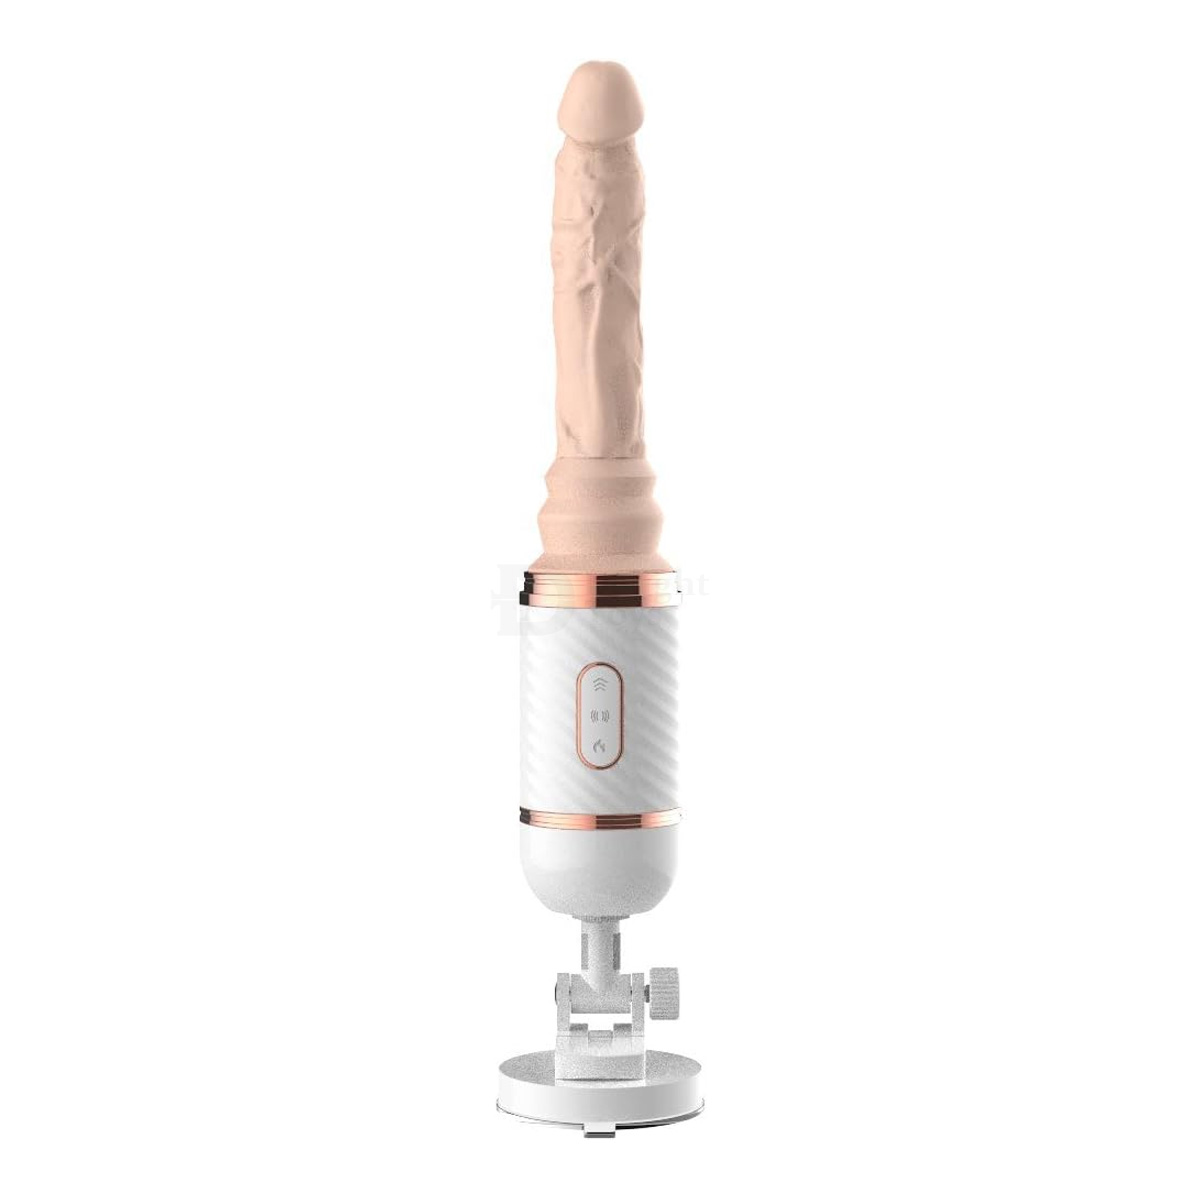 Premium silicone realistic thrusting vibrating dildo sex toy machine for women